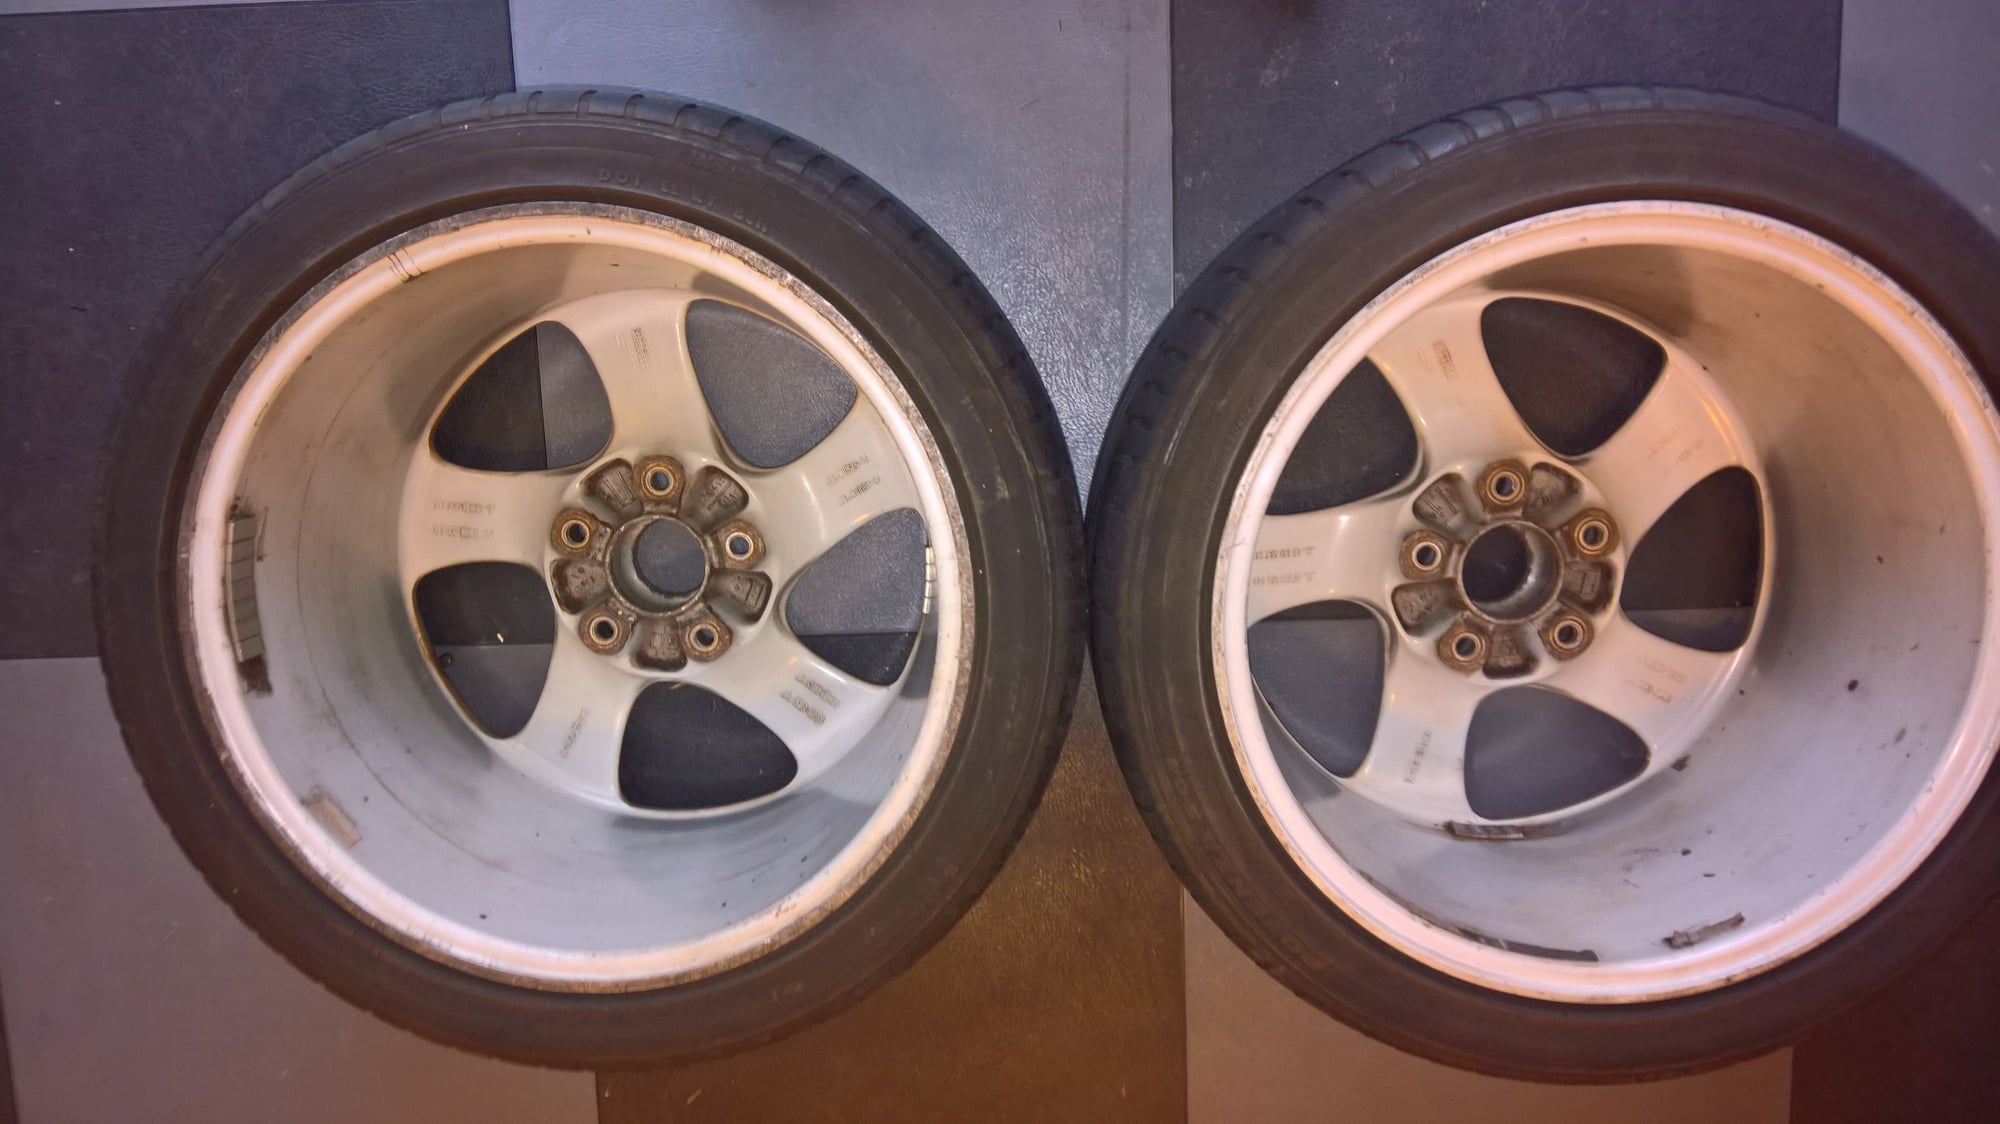 Wheels and Tires/Axles - 993/996 Hollowspoke Wheels and Bridgestone Potenza S04 tires. - Used - 1995 to 2005 Porsche 911 - Redmond, WA 98052, United States